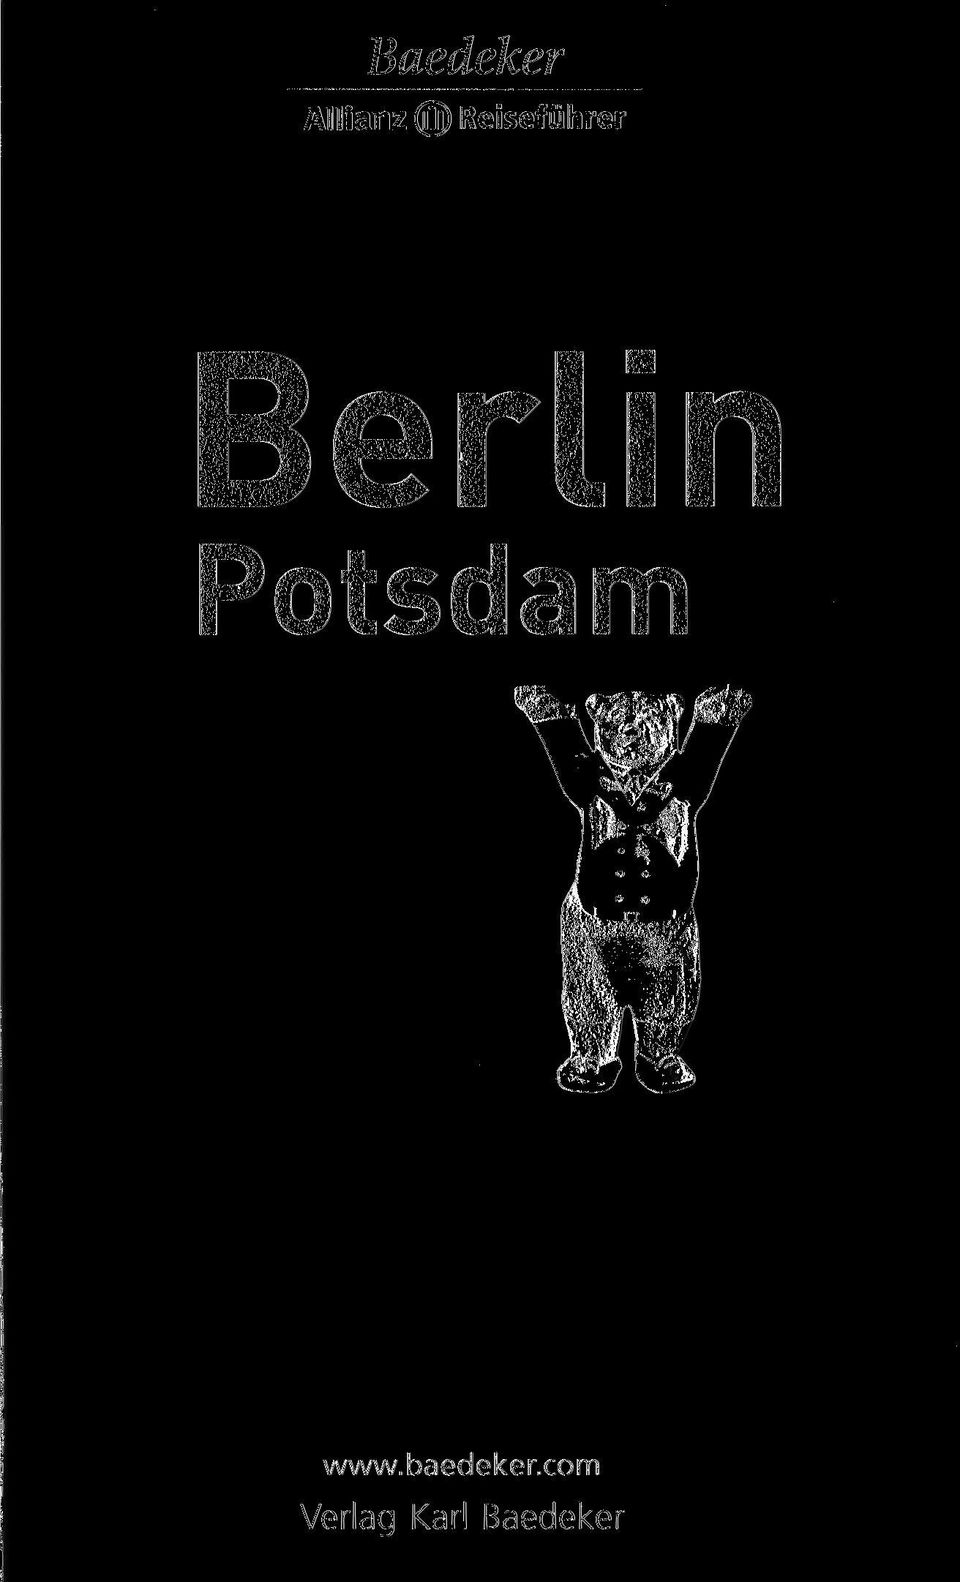 Potsdam шы> www.